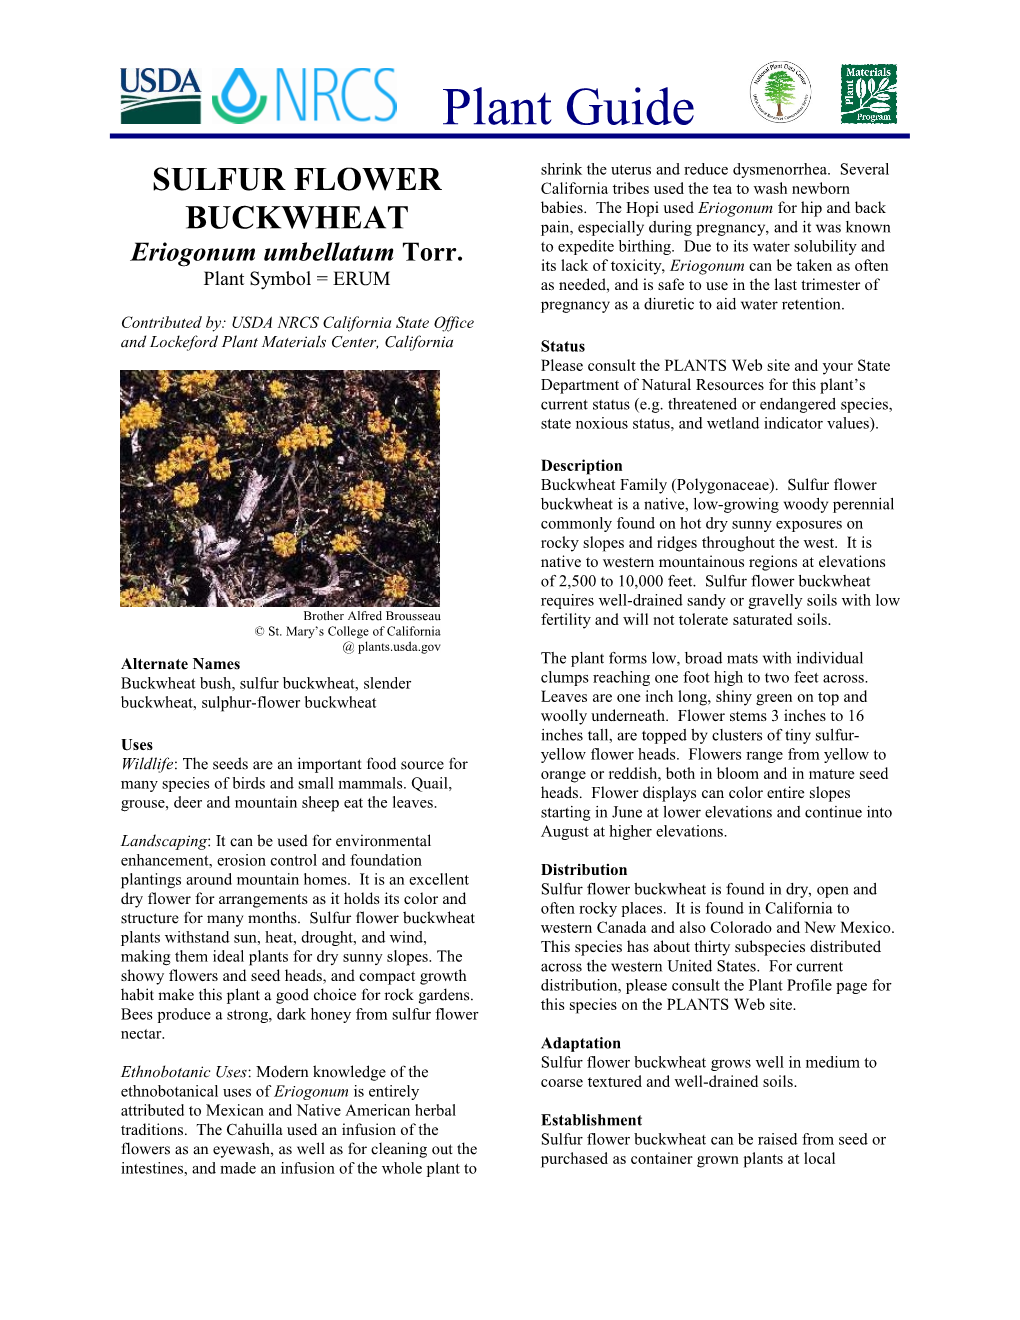 Sulfur Flower Buckwheat